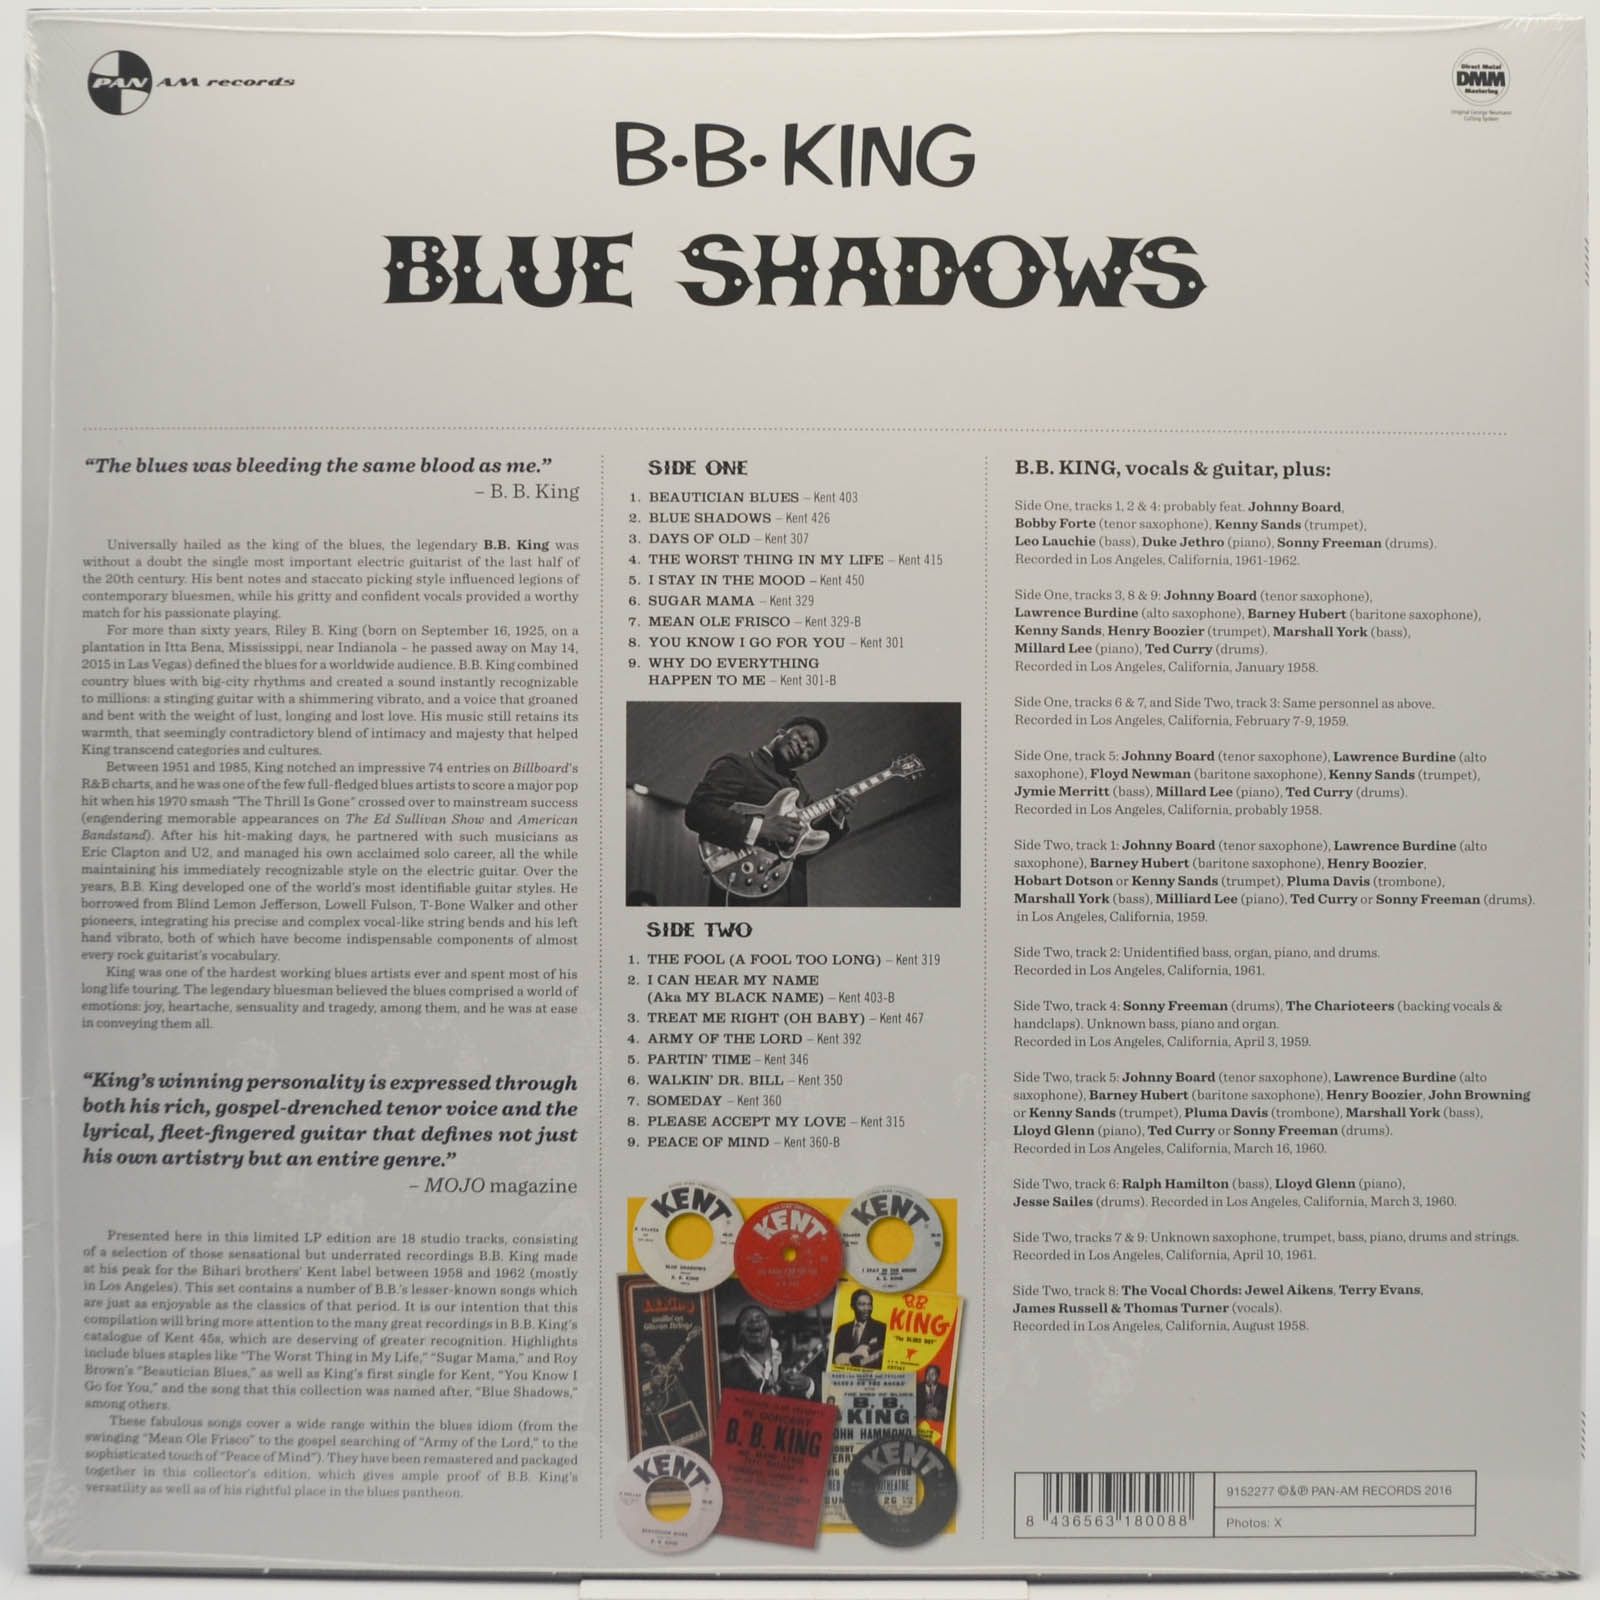 B.B. King — Blue Shadows - Underrated Kent Recordings 1958-1962, 2016